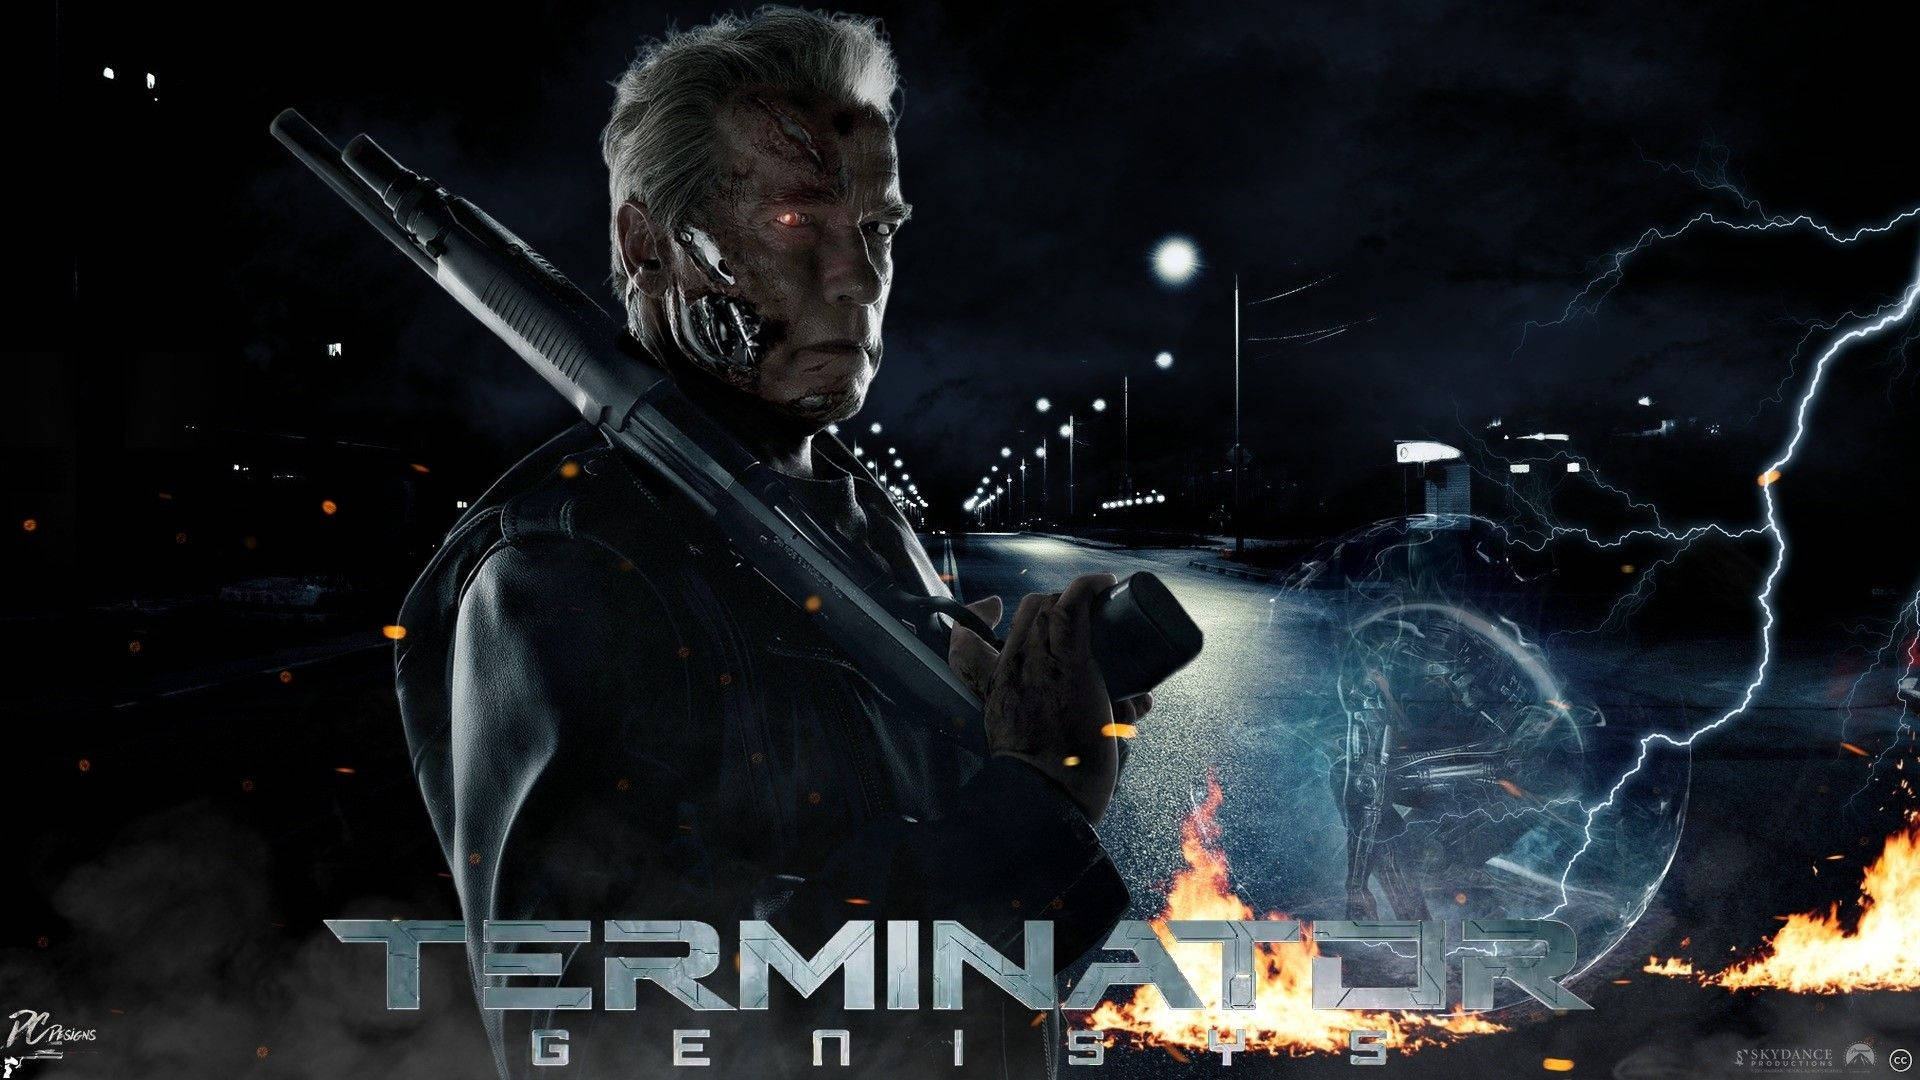 Terminator Genisys Poster